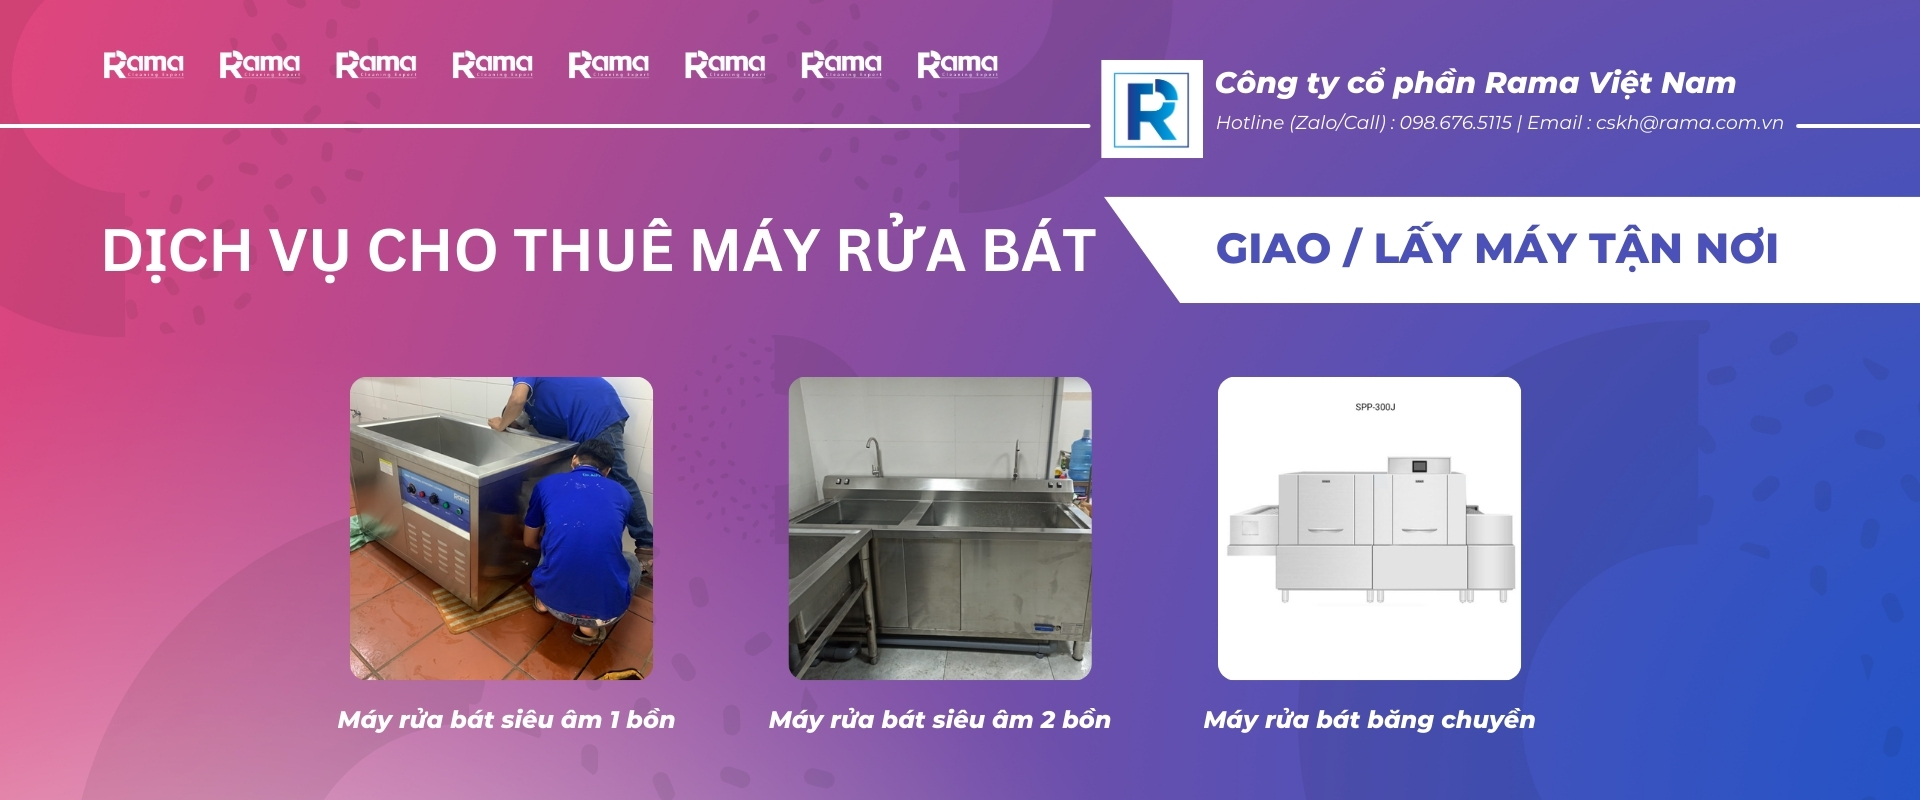 Rama Dich vu cho thue may rua bat